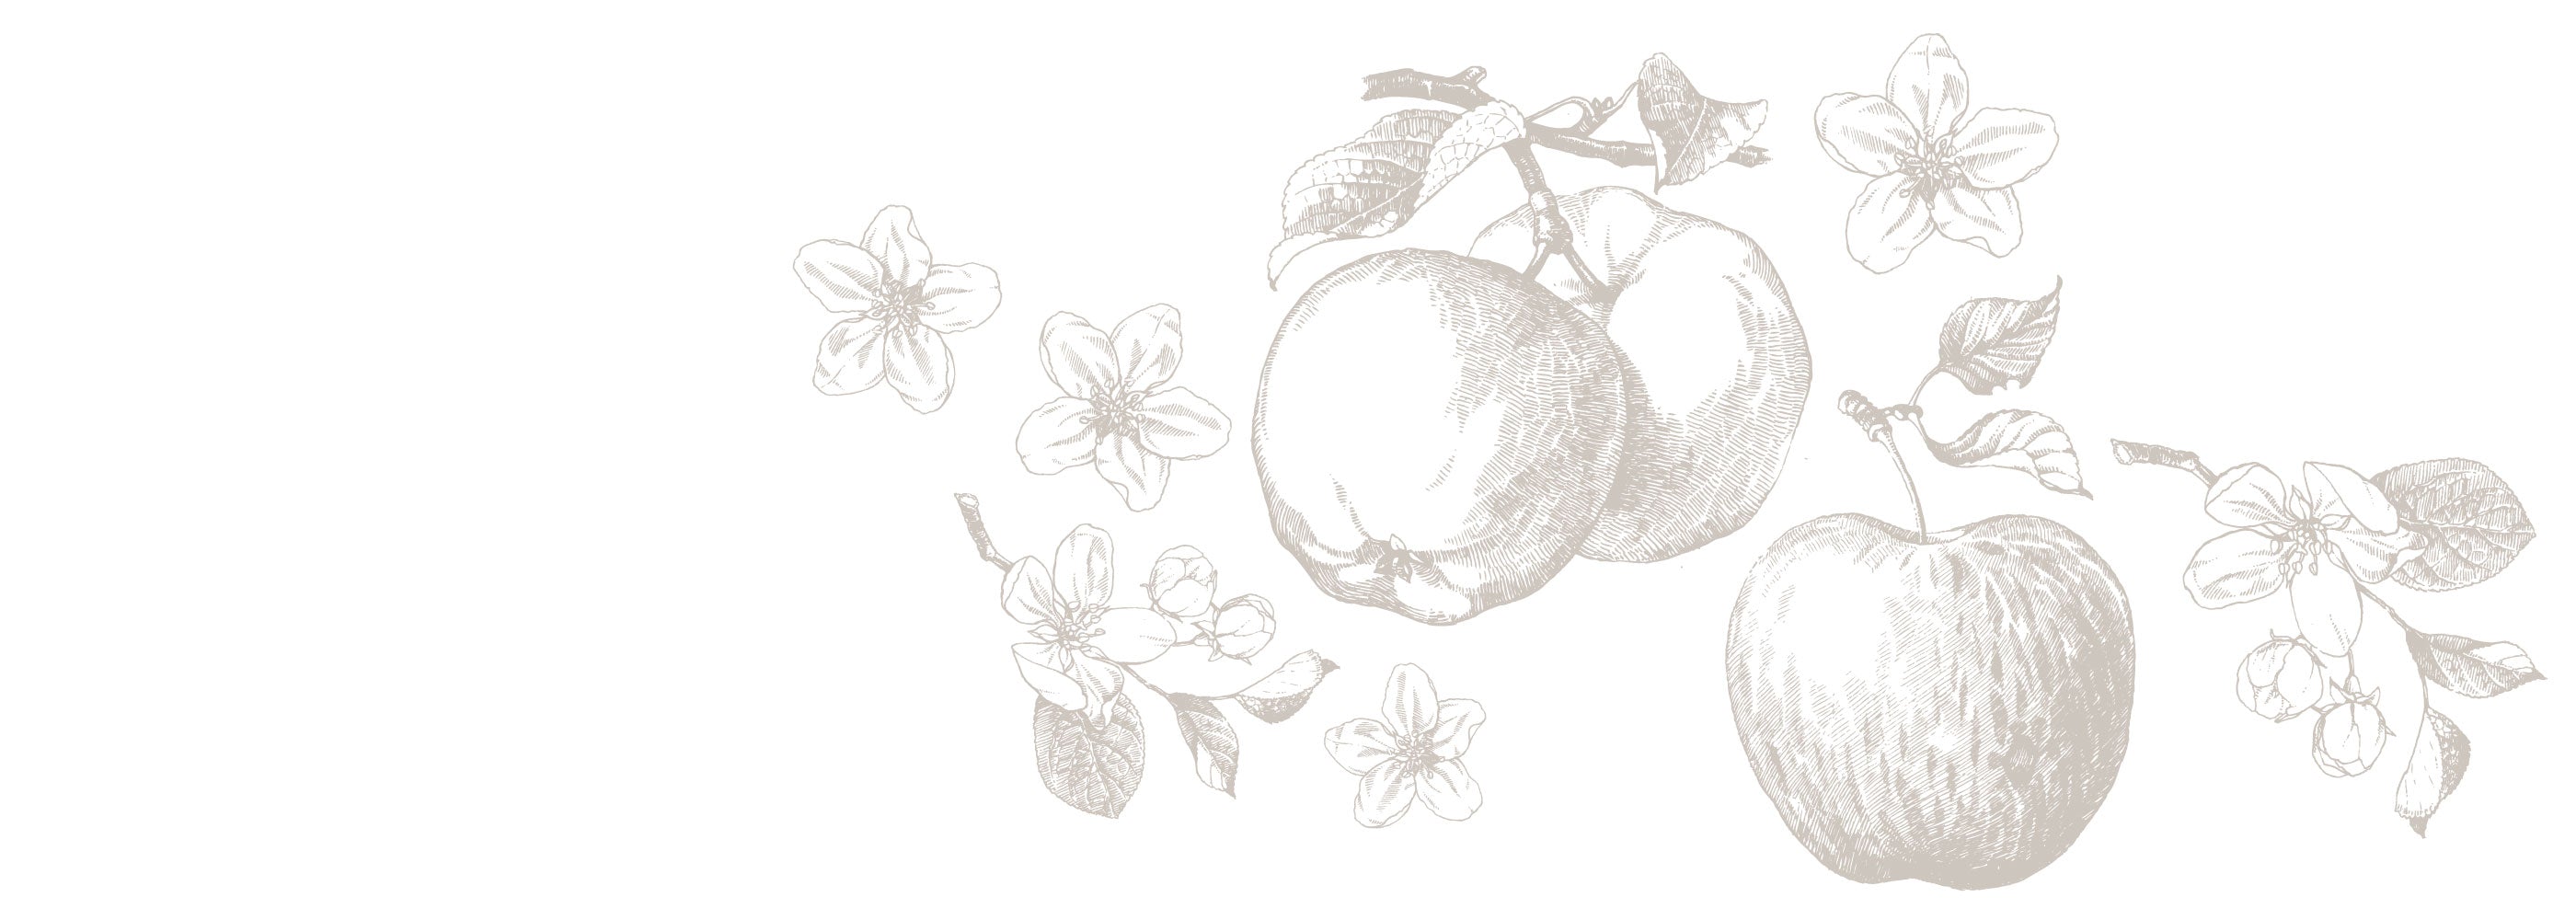 grafik äpfel und apfelblüten